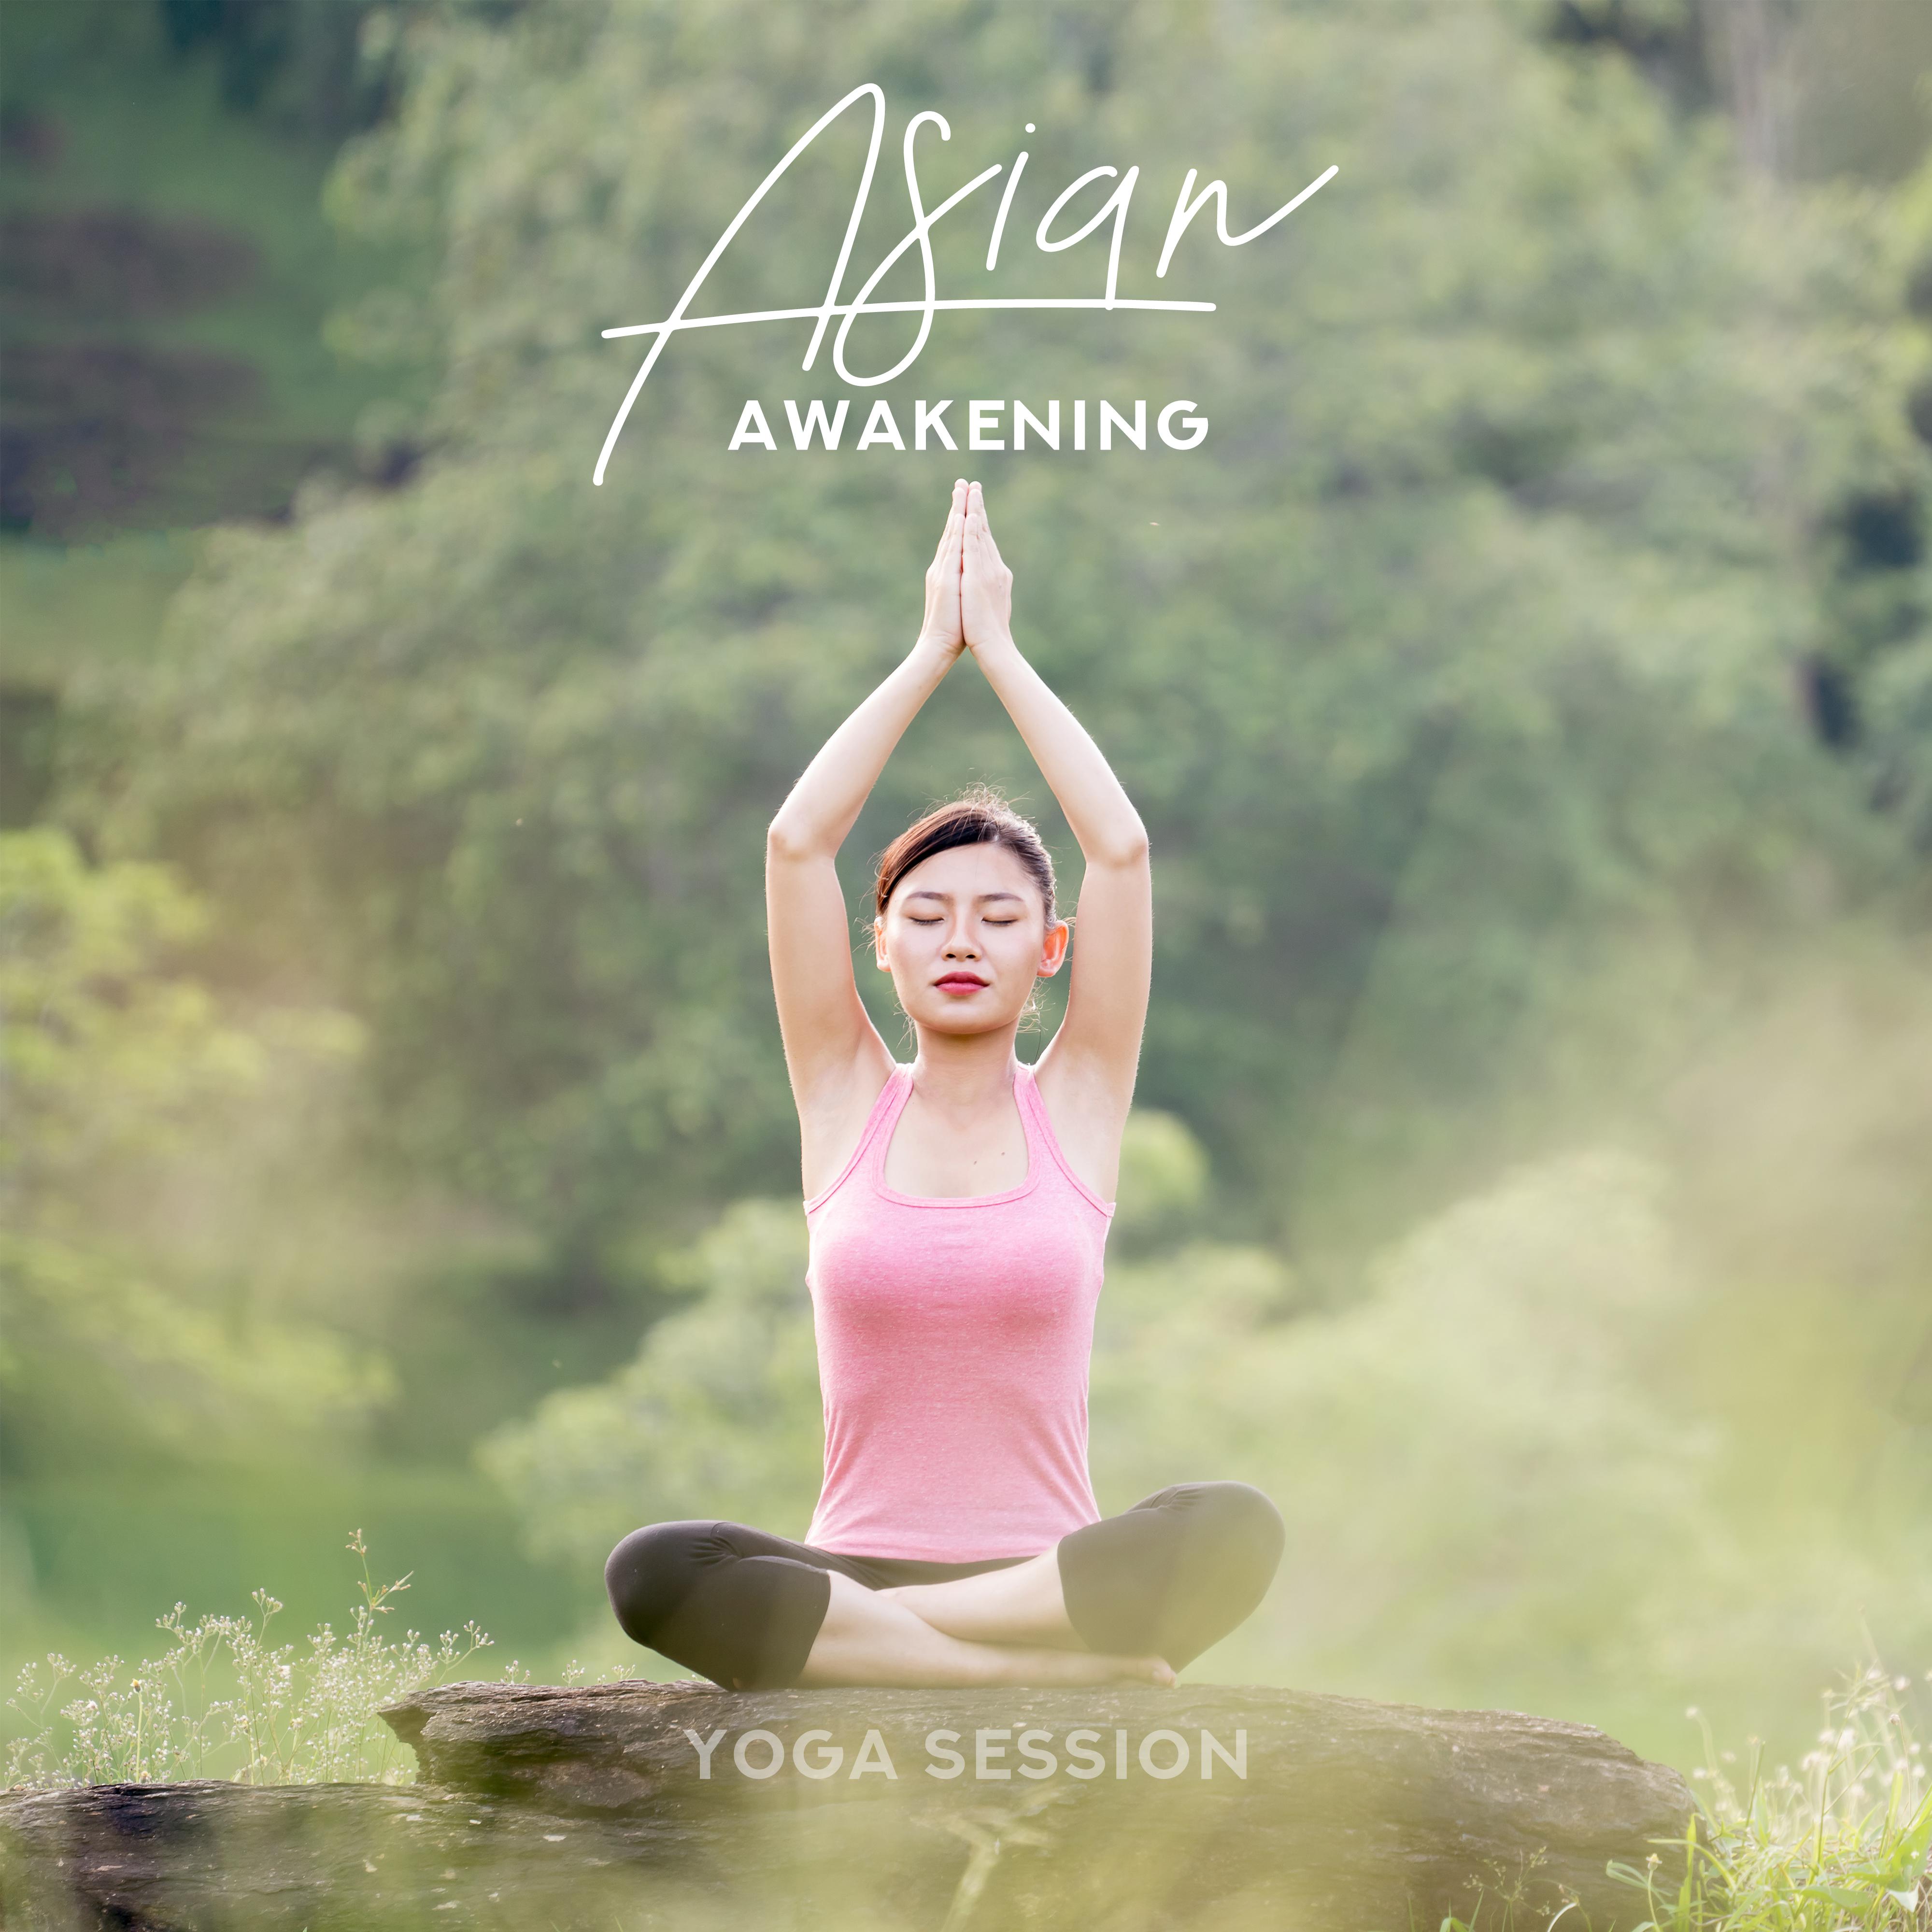 Asian Awakening Yoga Session  Meditation New Age Mental Healing Music, Deep Relaxation Sounds